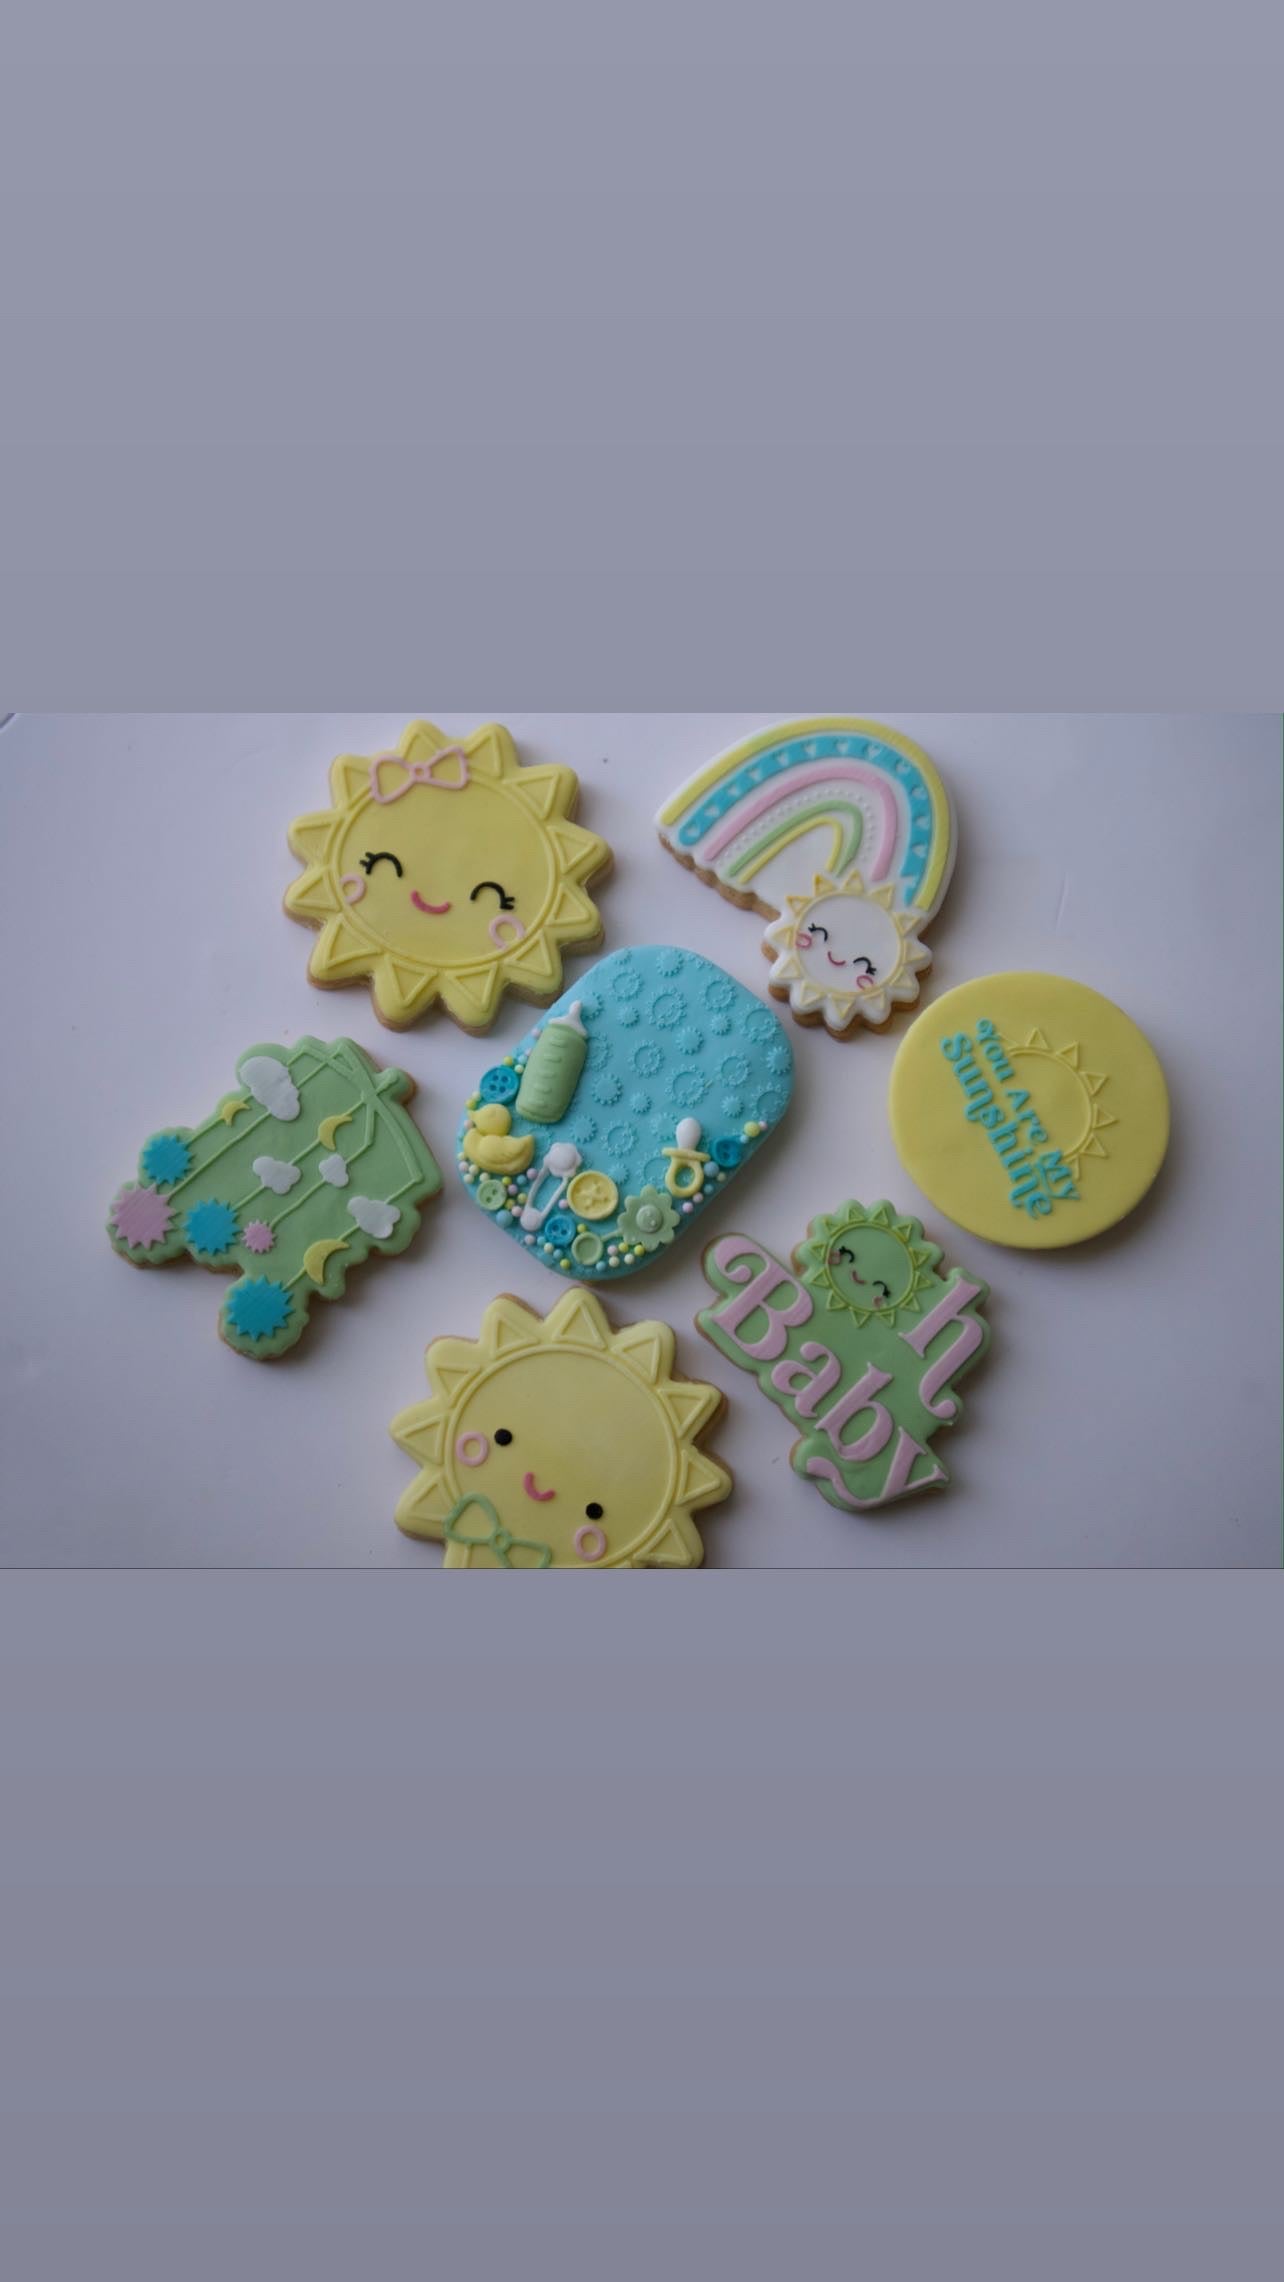 Baby sun Boy - Cookie cutter + Debossing MEG cookie cutters